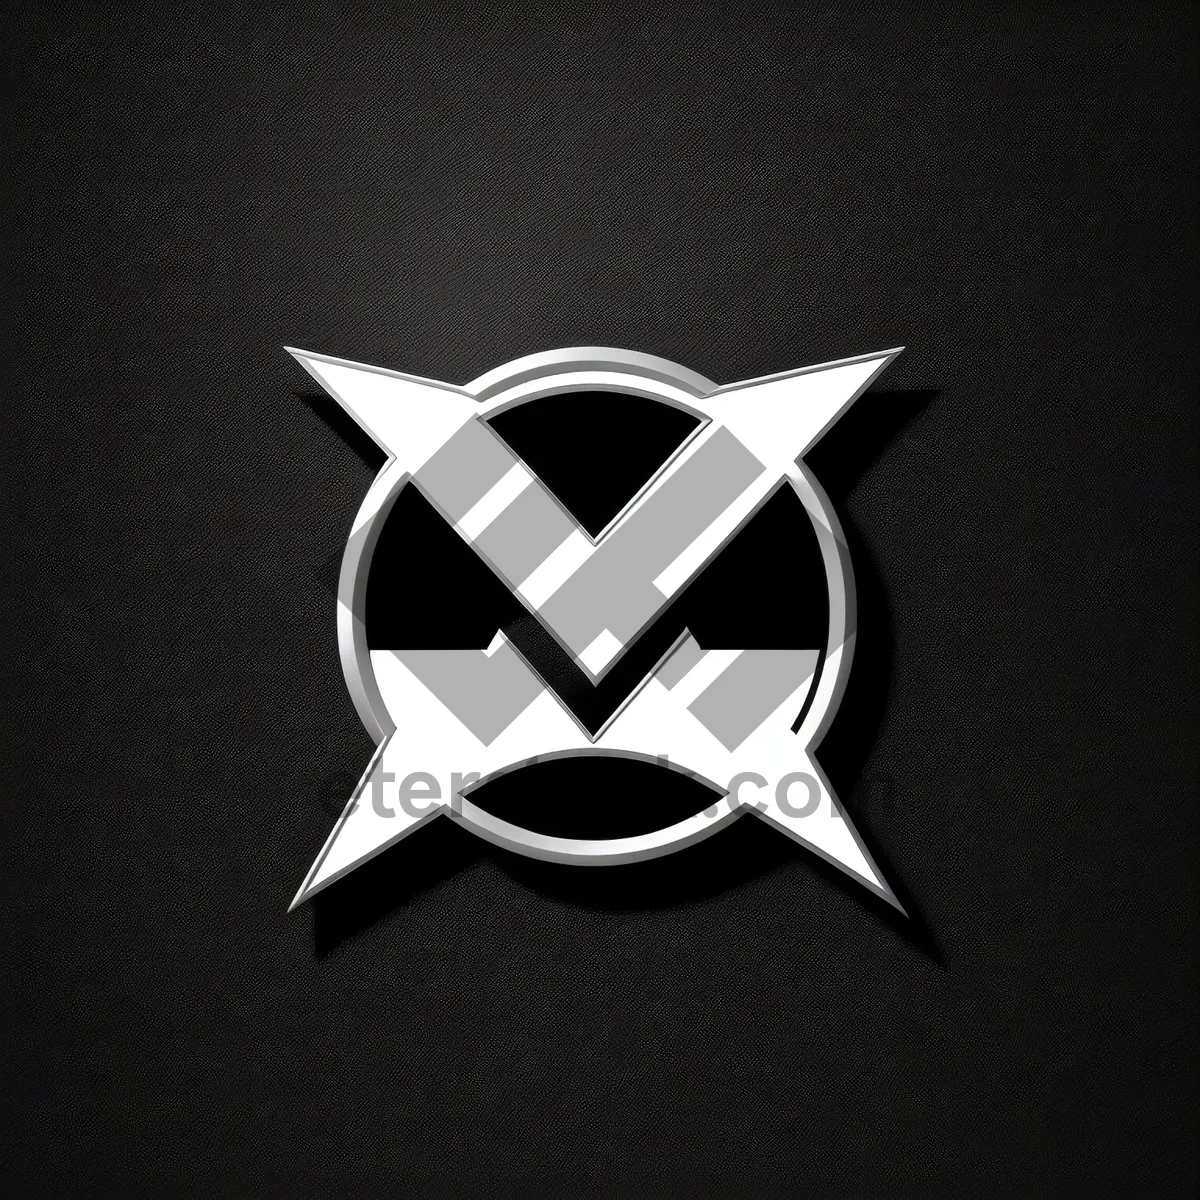 Pirate Emblem: Iconic Heraldry Design